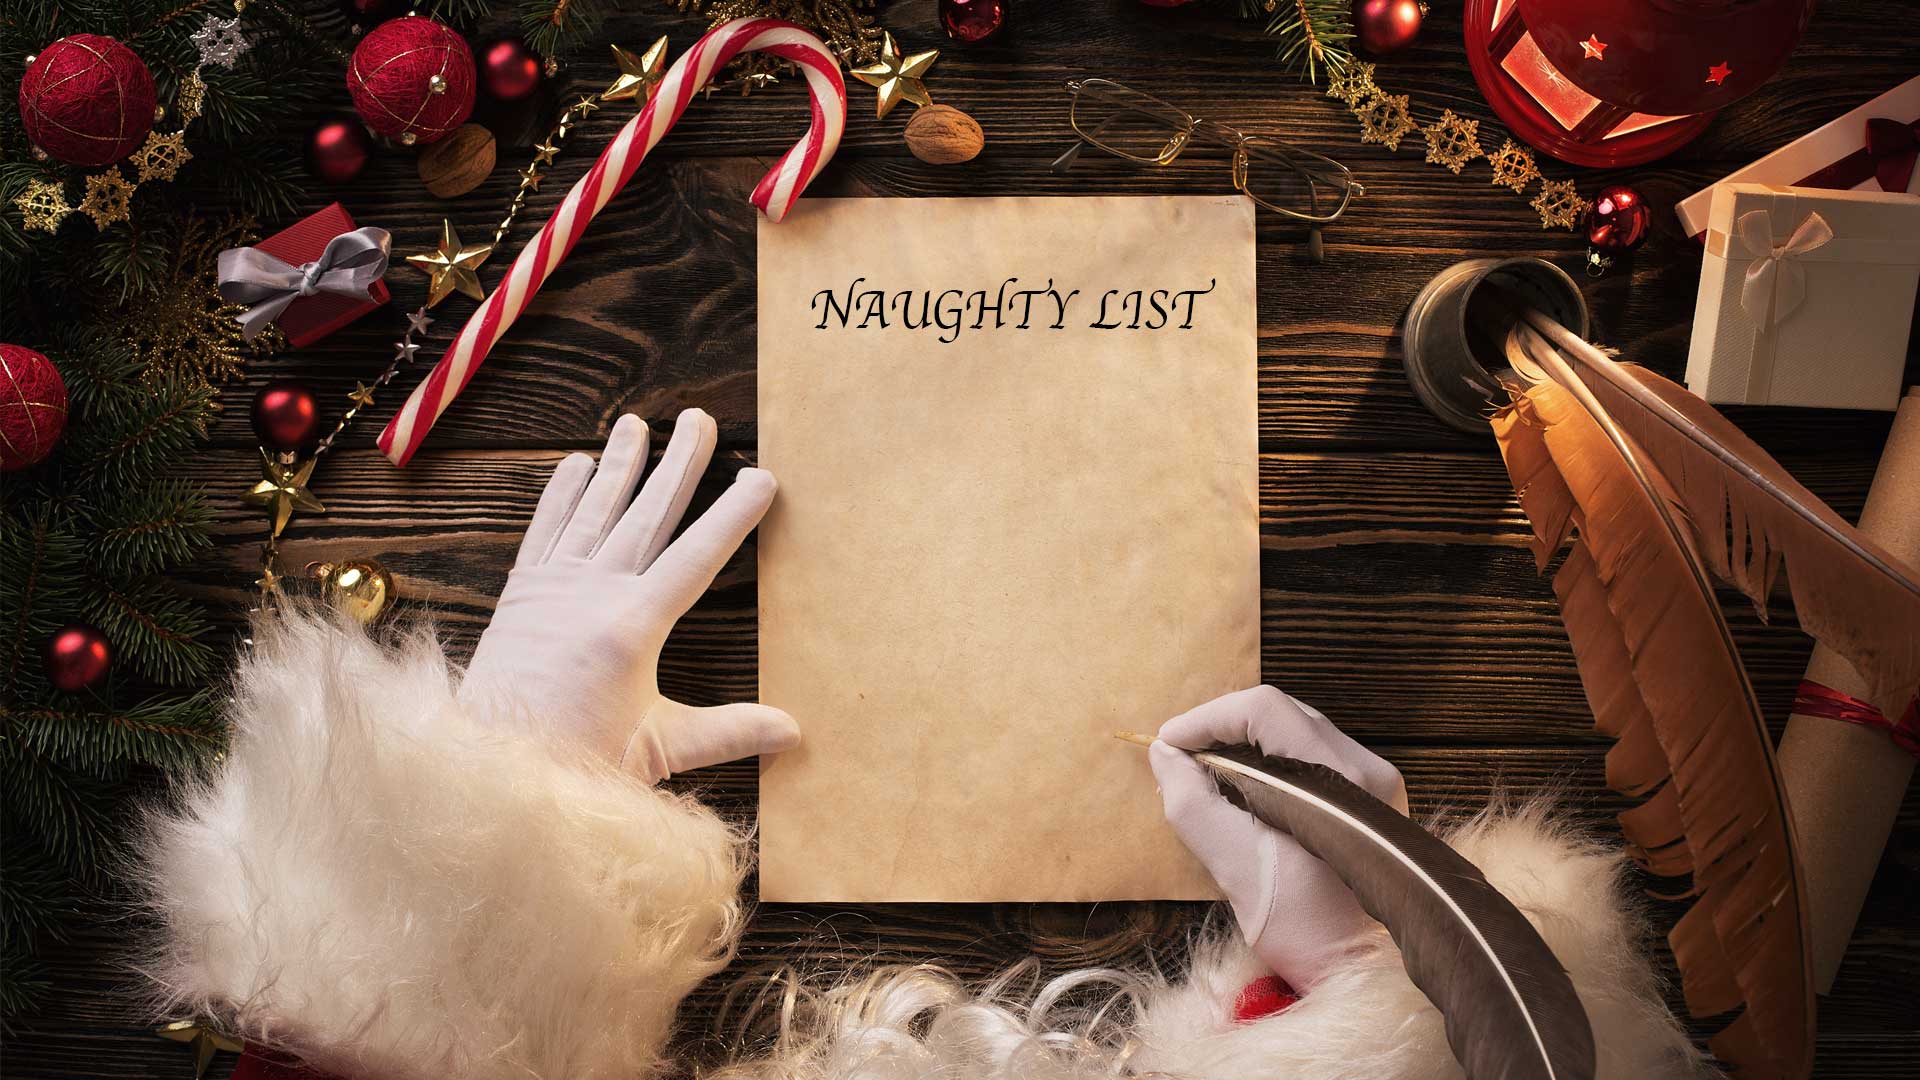 Santa preparing his list of naughty and nice kids